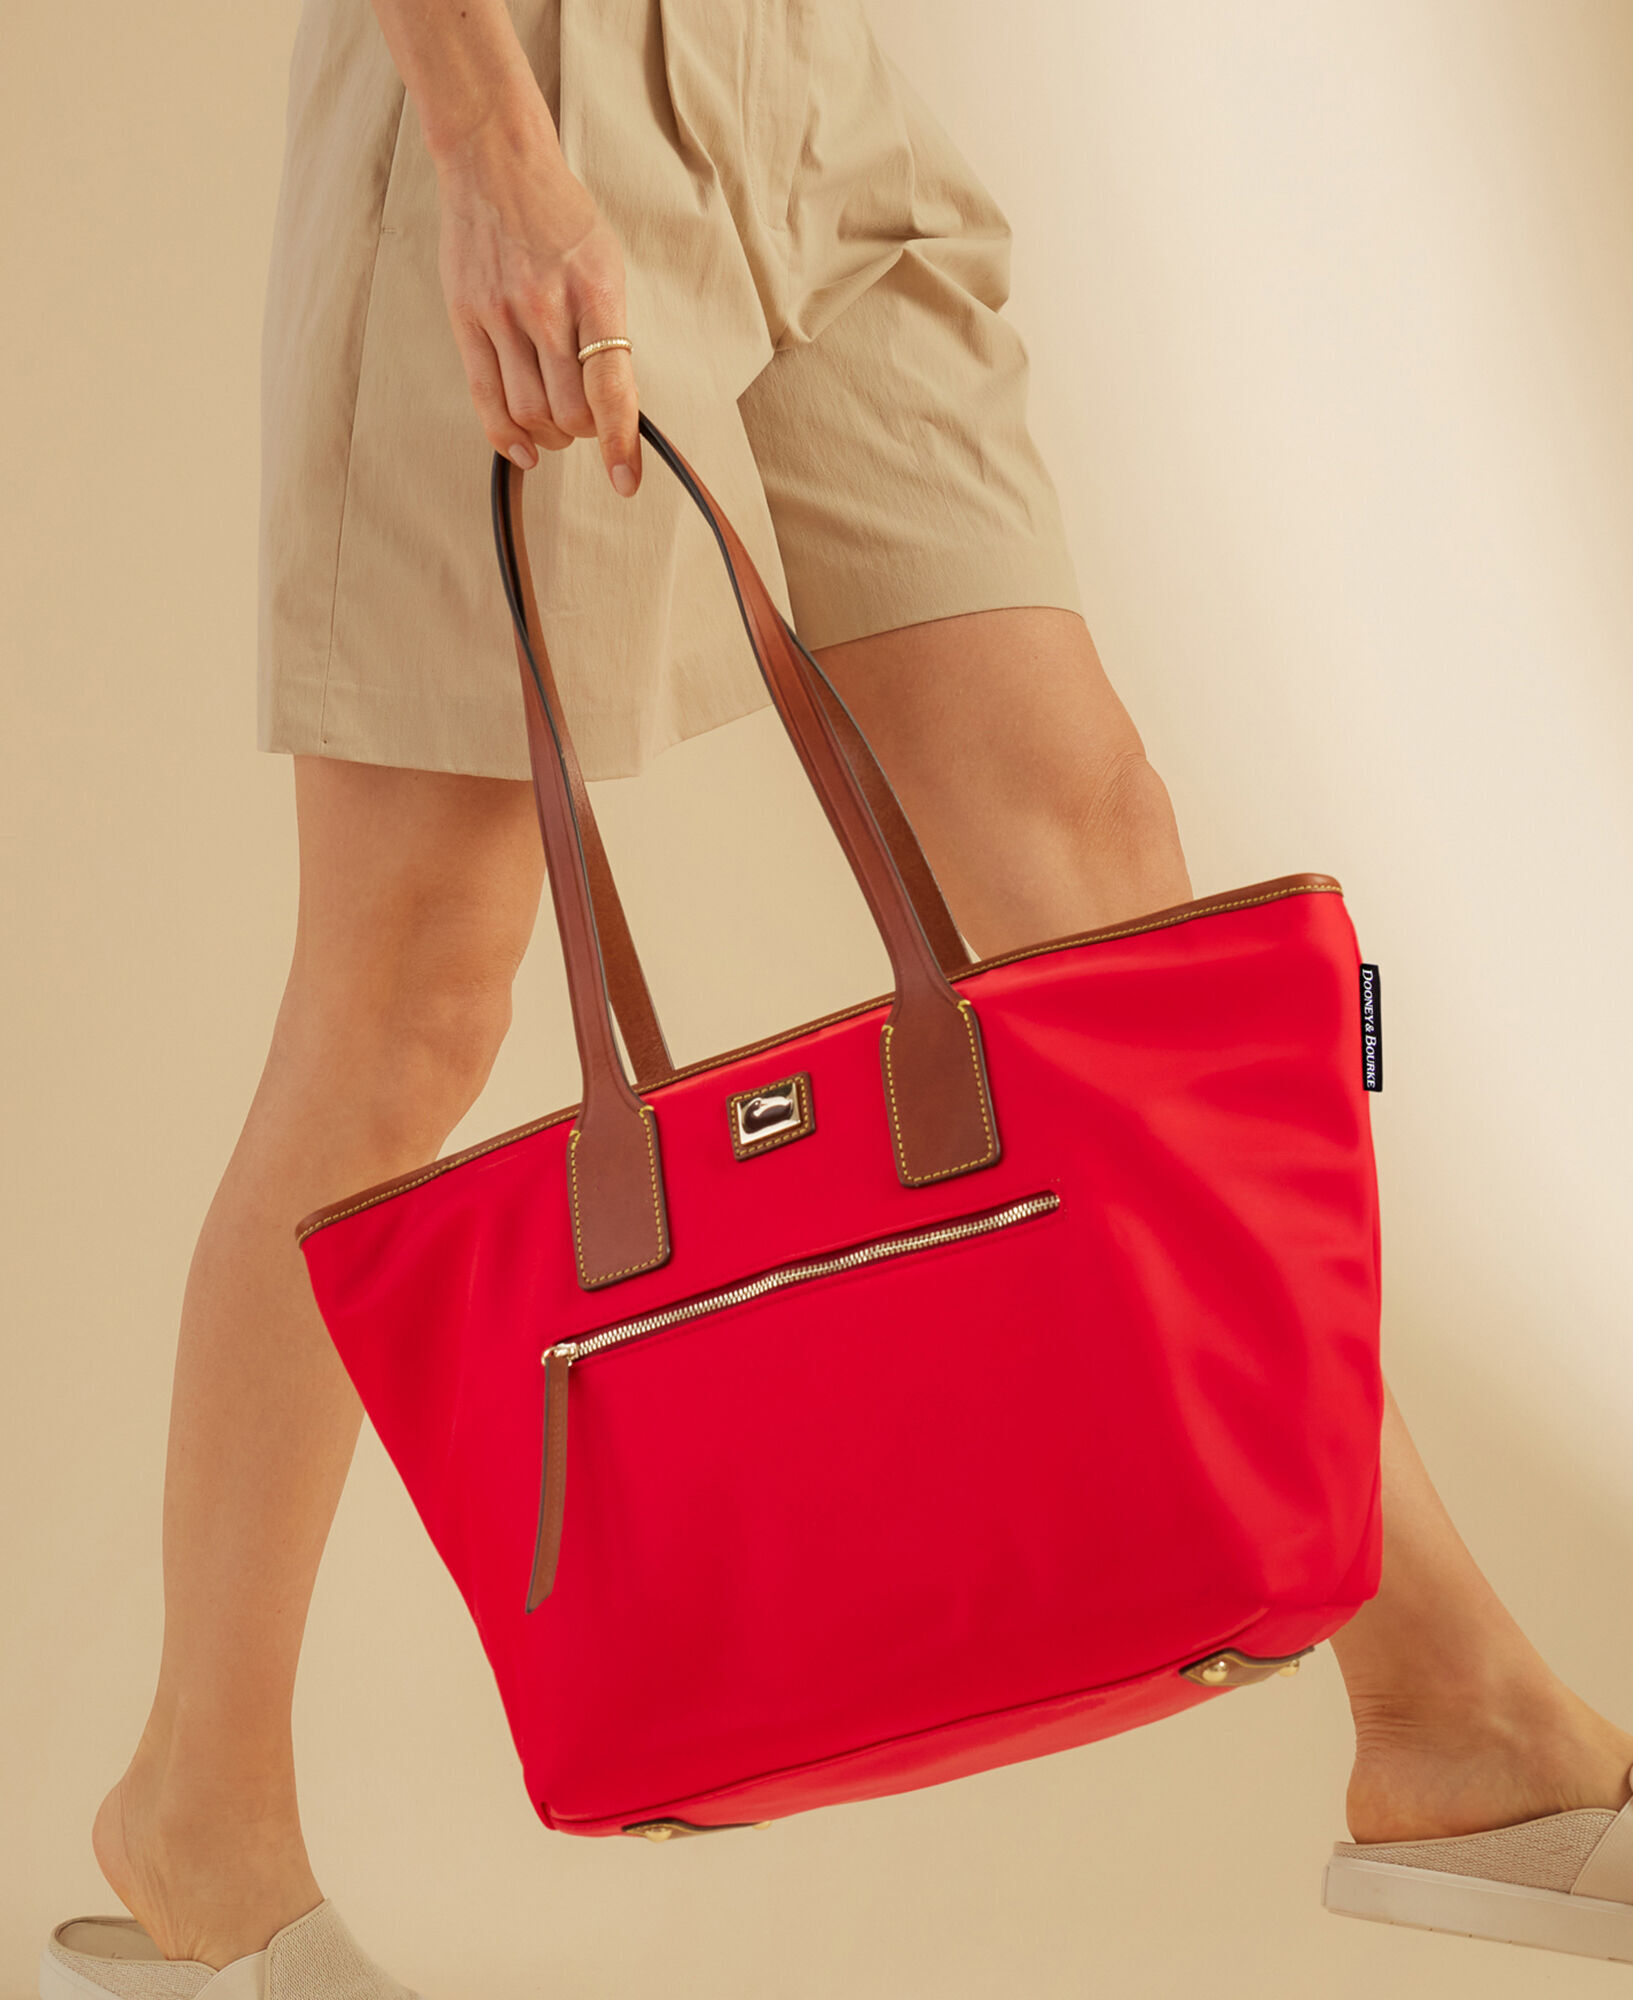 Shop Nylon - Luxury Bags & Goods | Dooney & Bourke